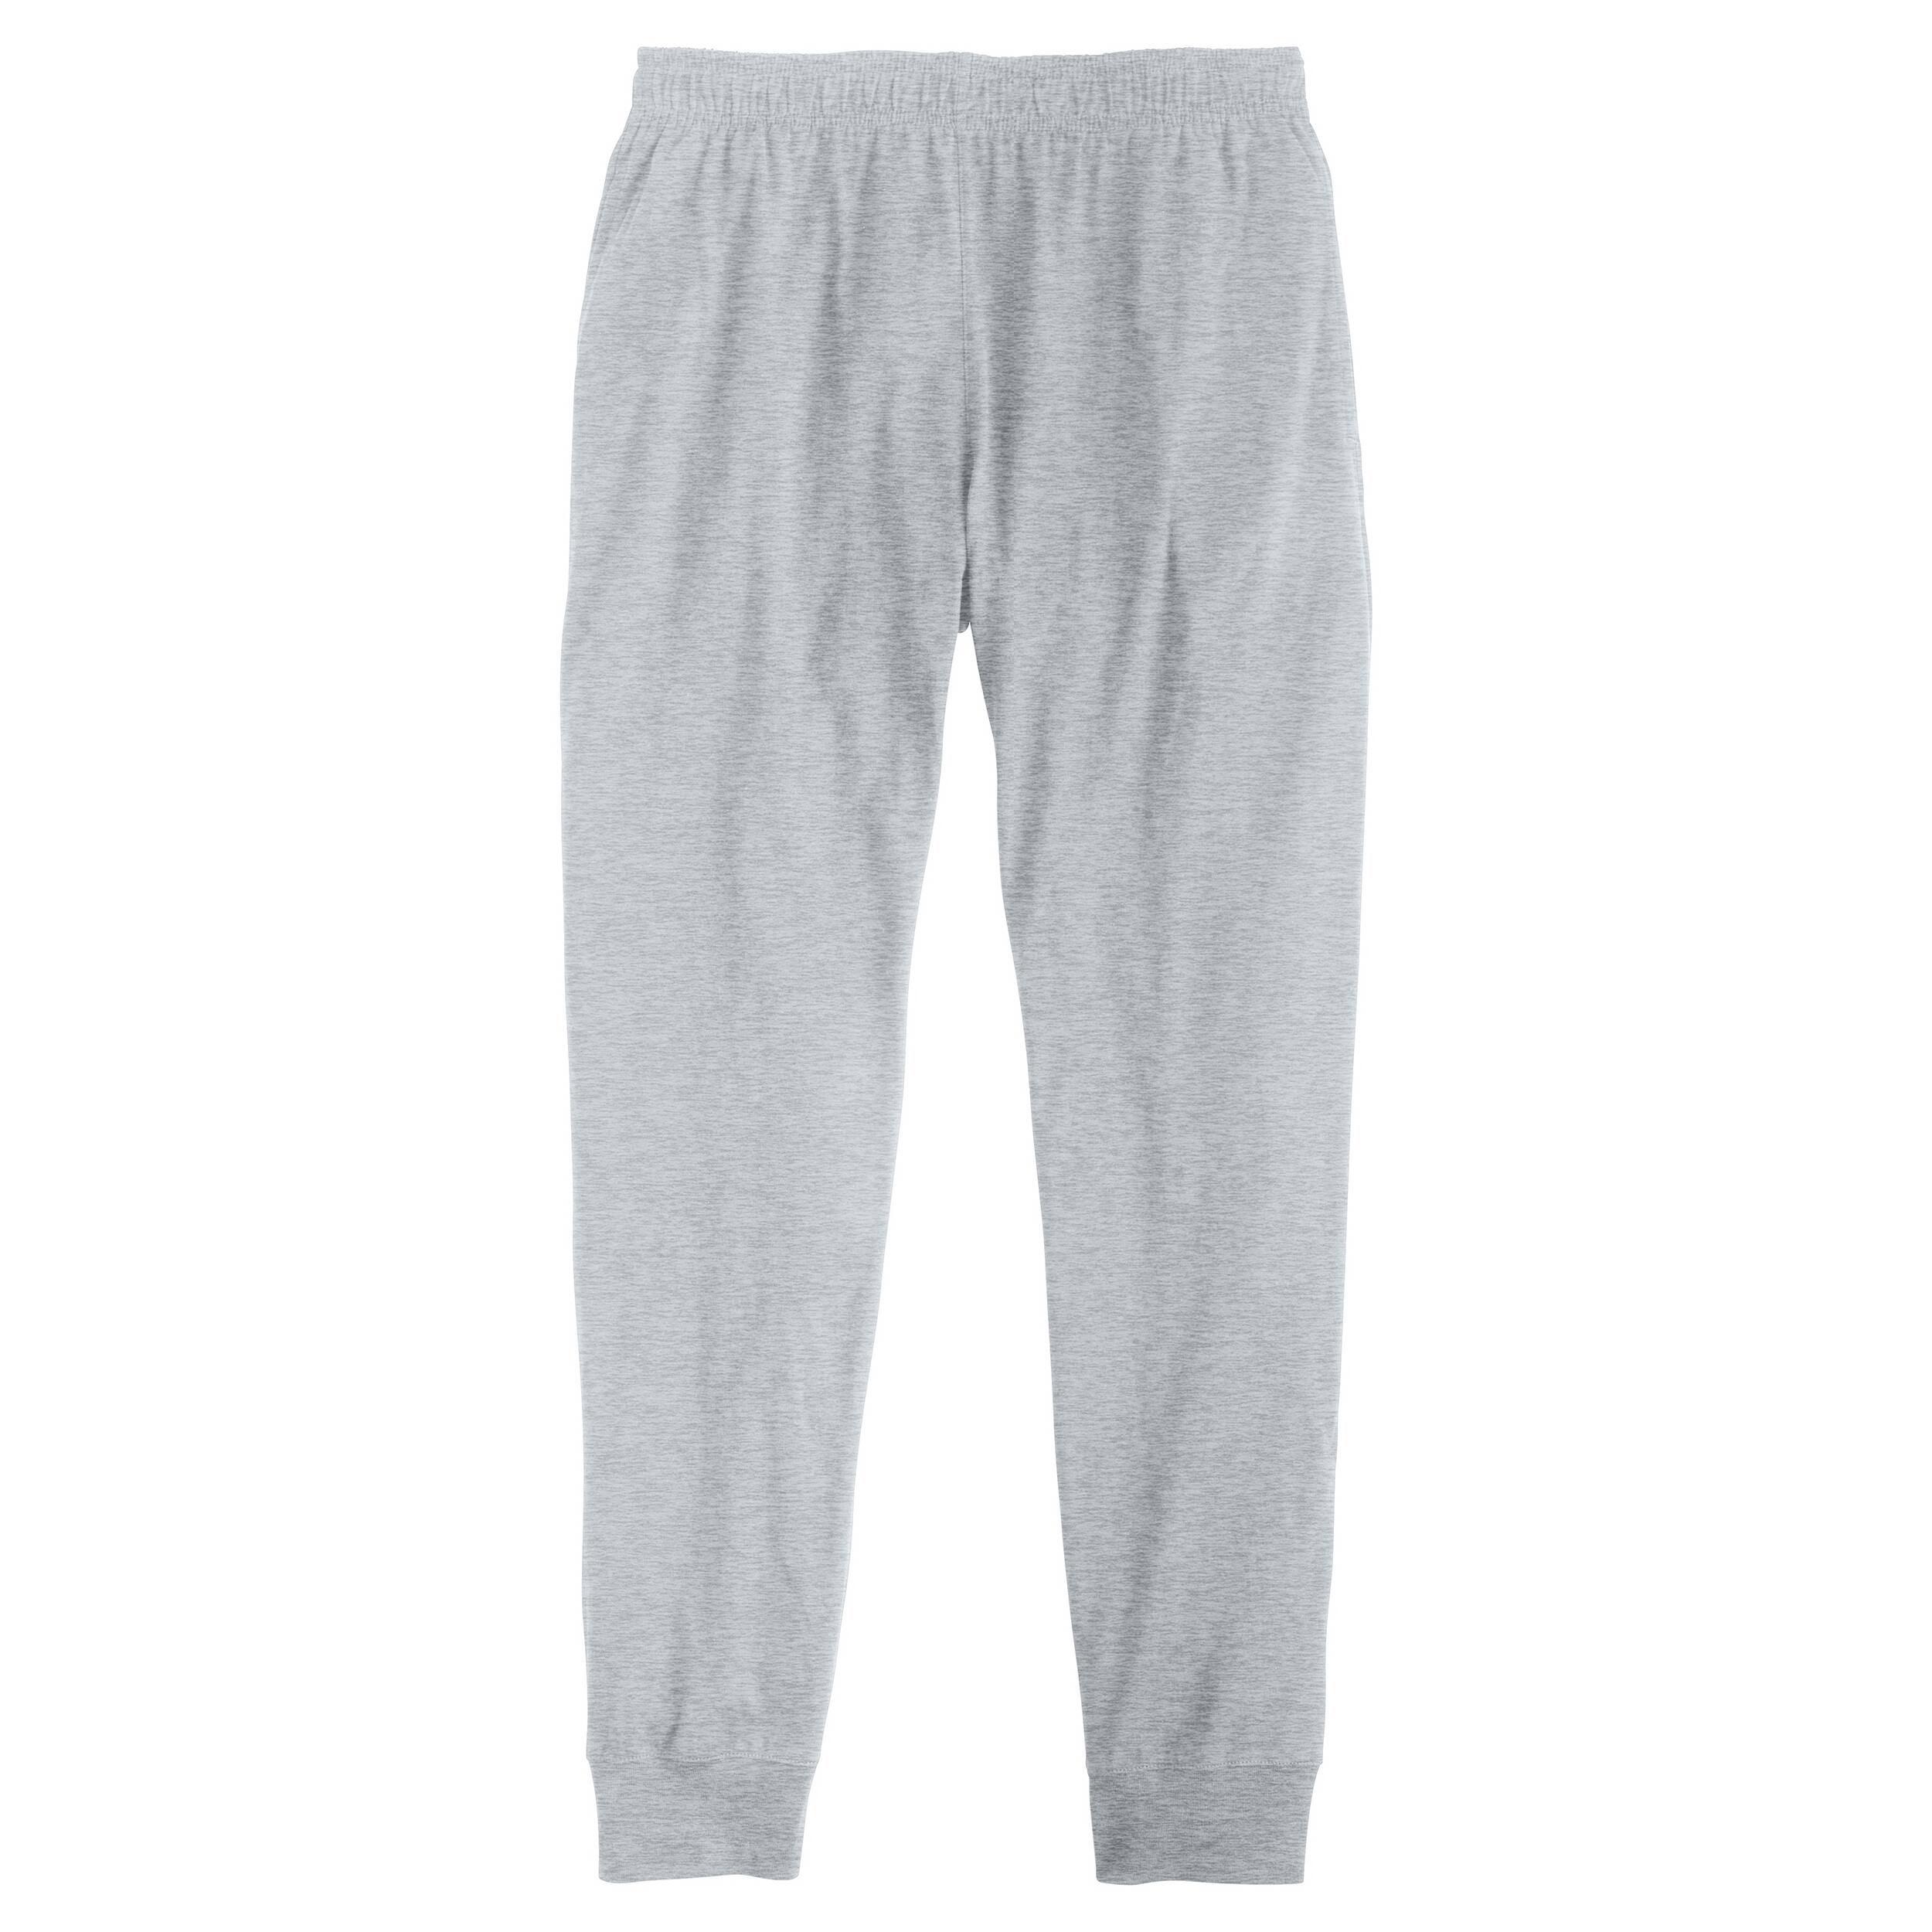  Hanes Originals Joggers, 100% Cotton Jersey Sweatpants